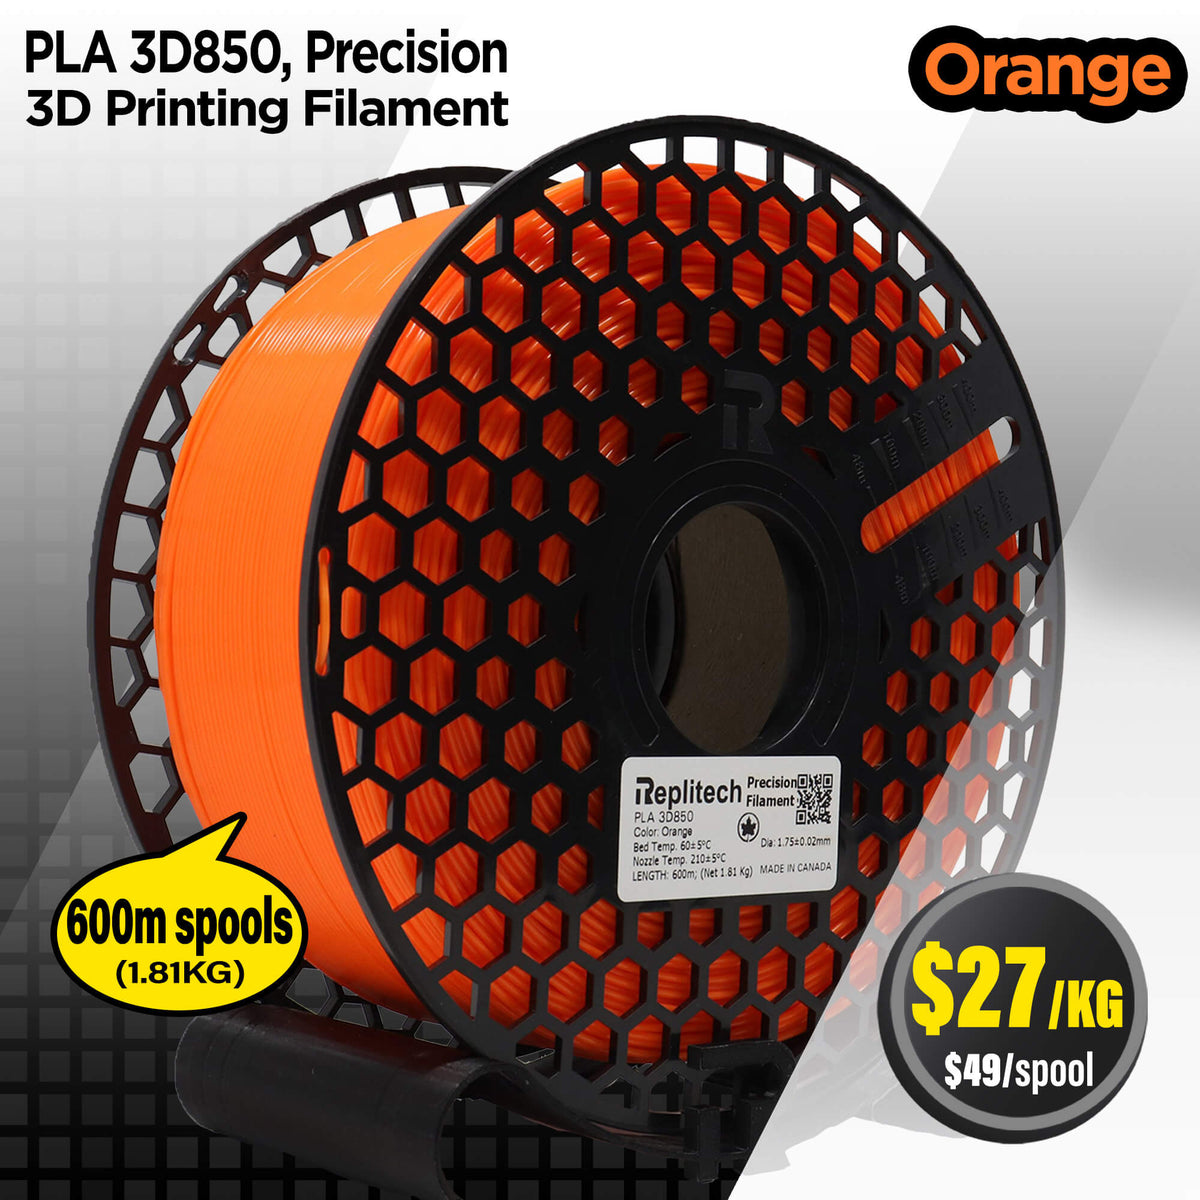 PLA 3D850 Precision Orange